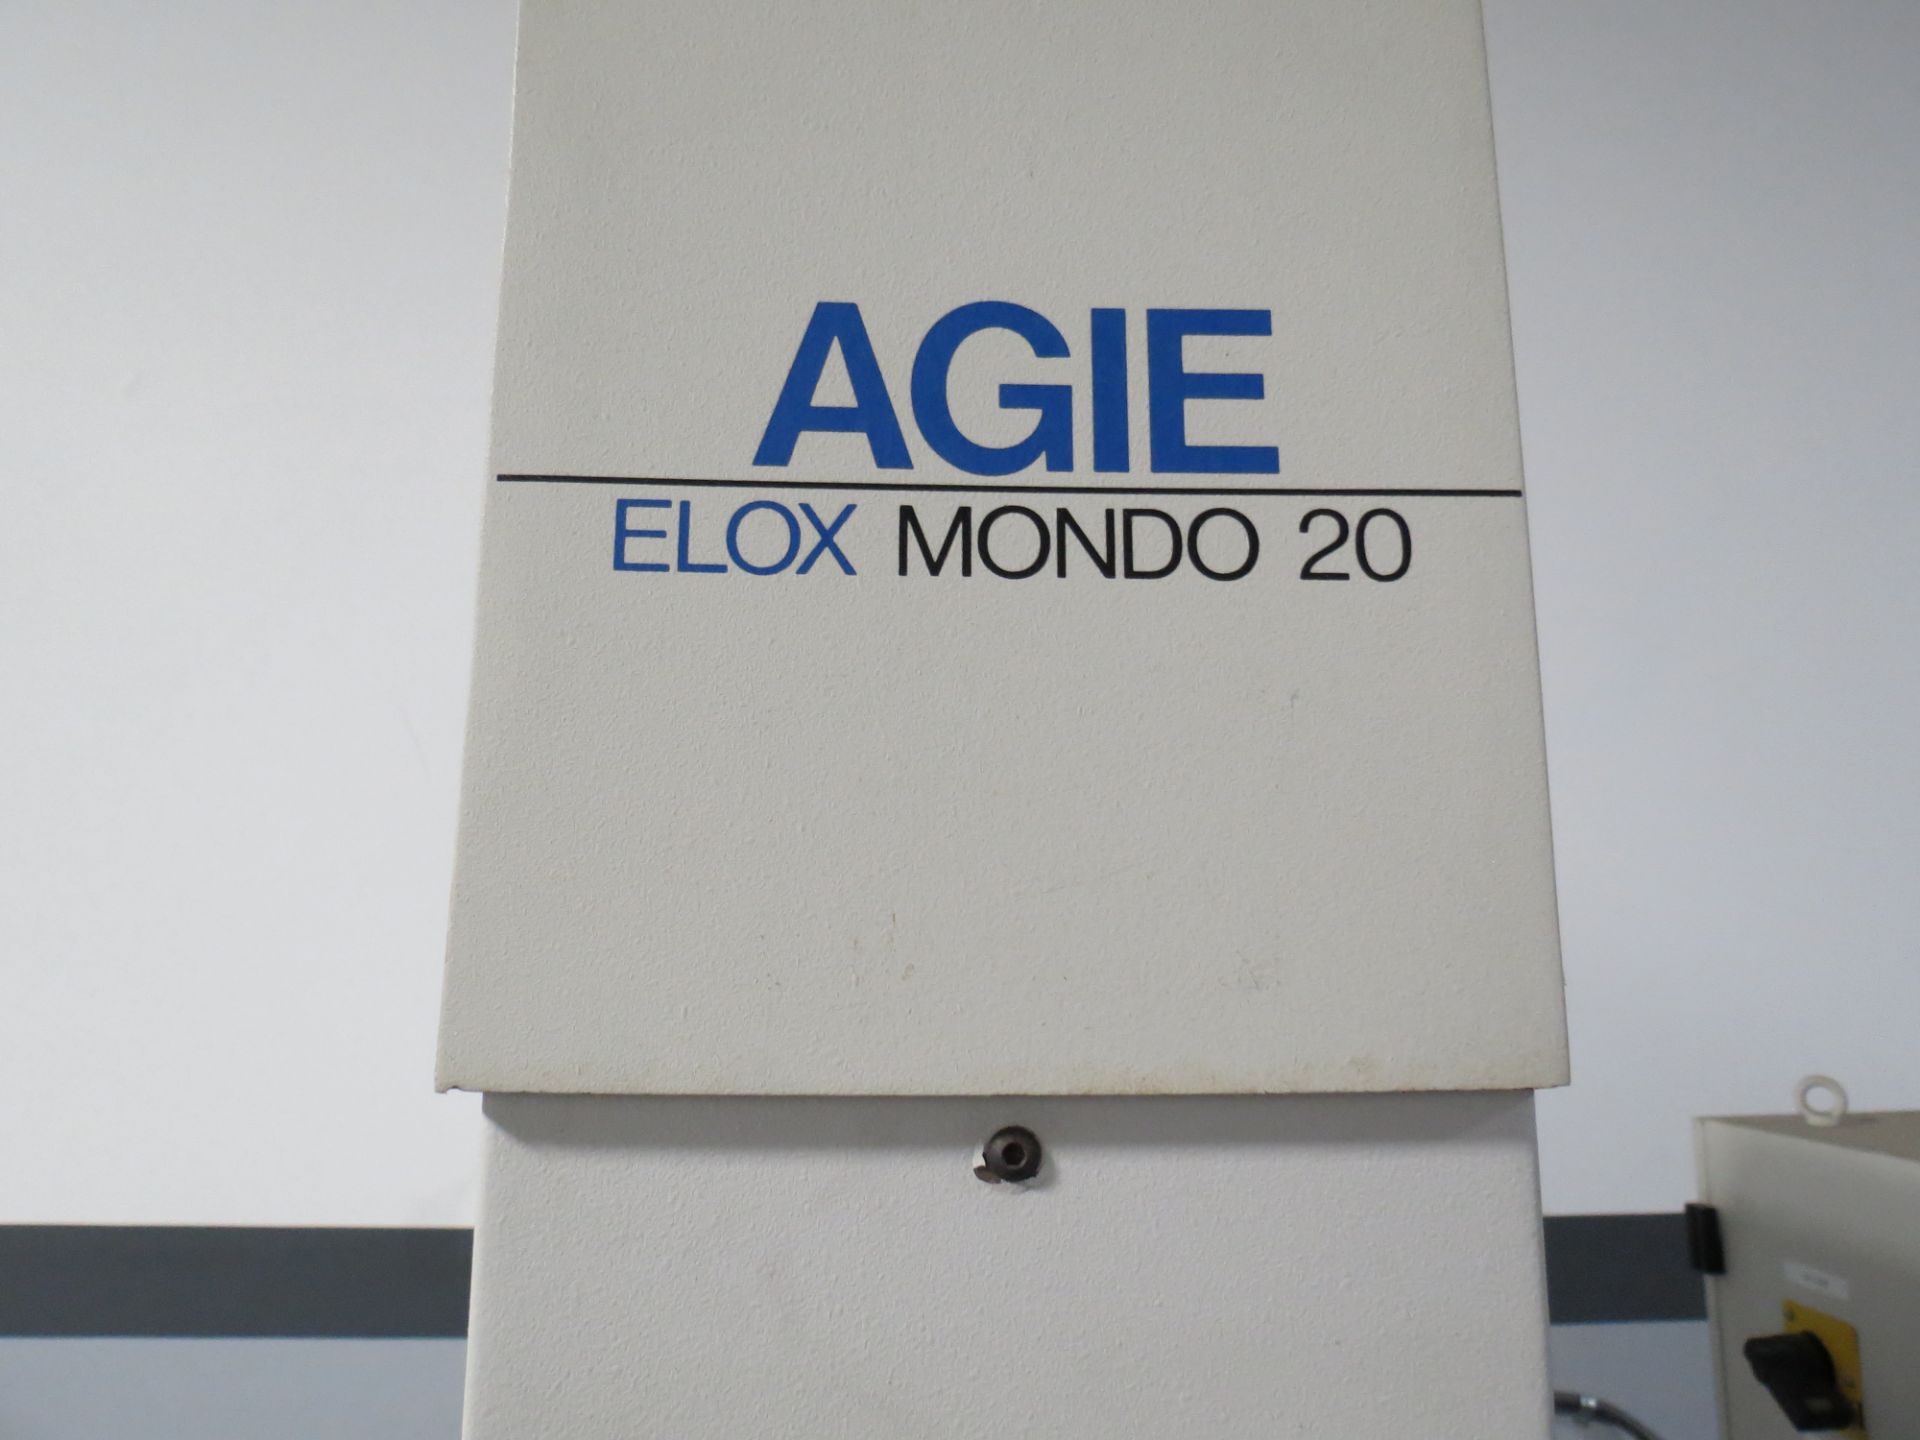 ELOX MONDO 20 AGIE FUTURA lll CNC DIE SINKER EDM MACHINE SN: M20THK-000077 (SUBJEC TO COMFIRMATION) - Image 6 of 13